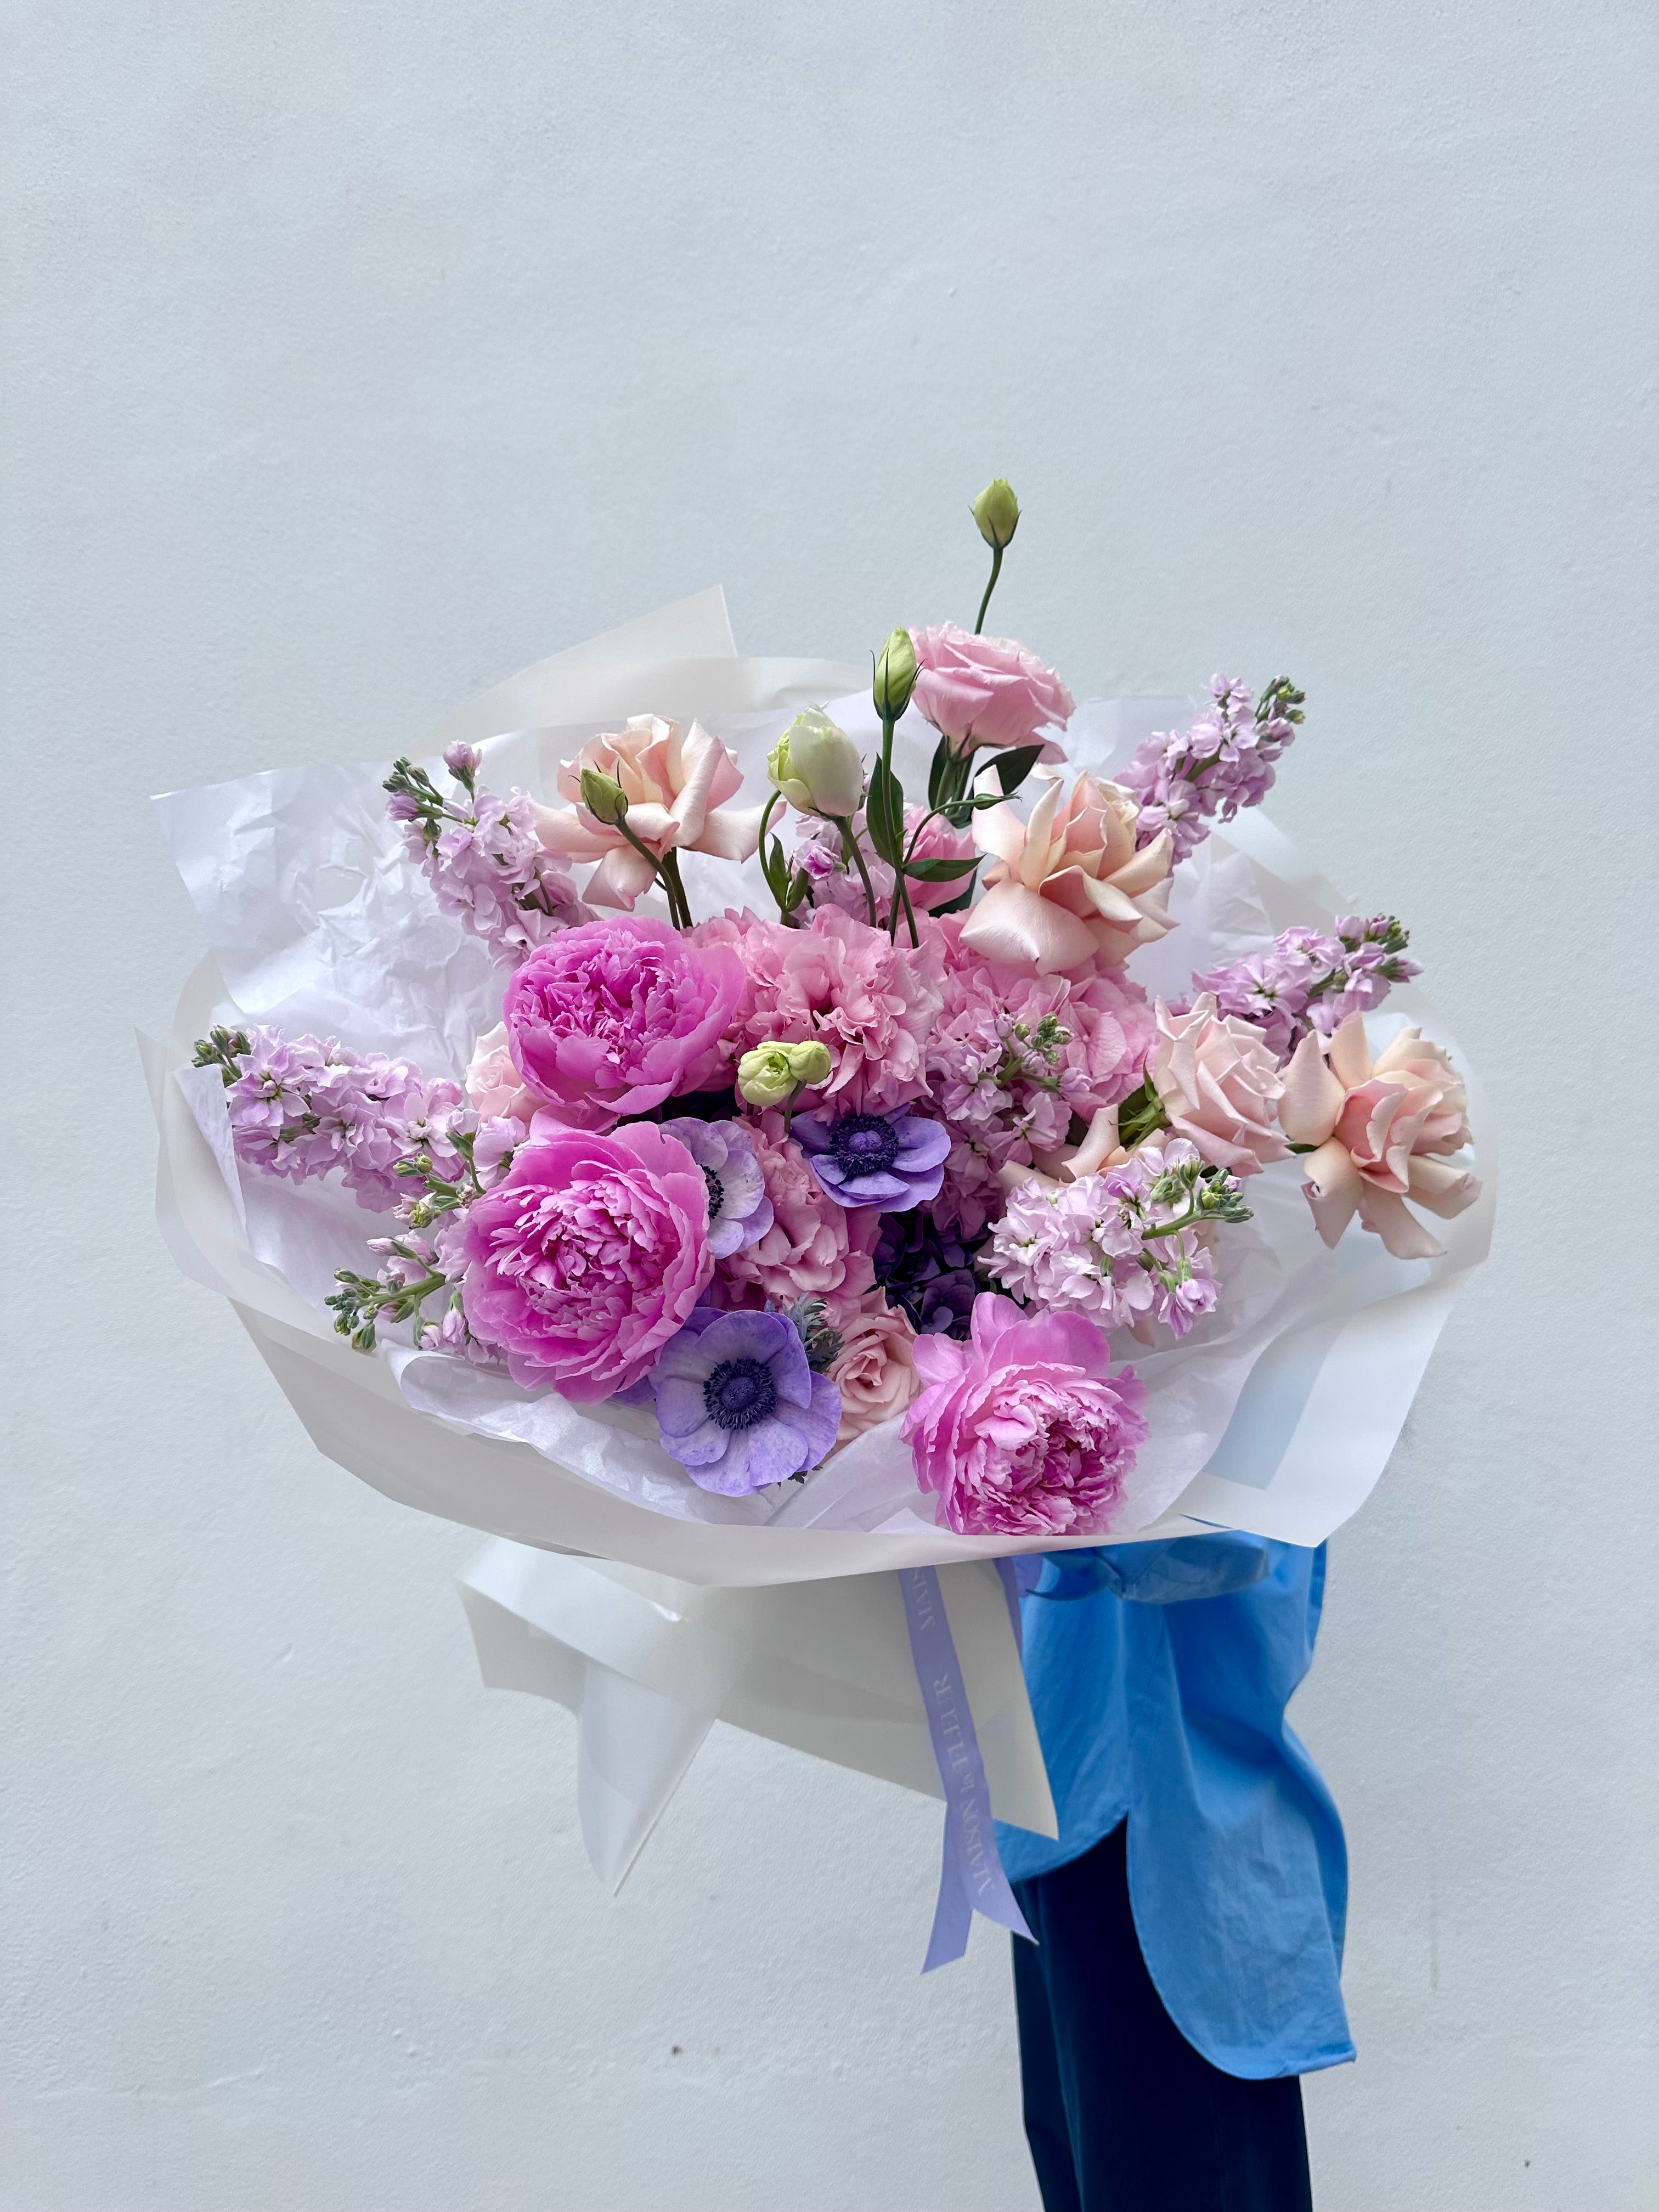 Endless Love - beautiful premium peonies, roses, European hydrangea, and stock flowers